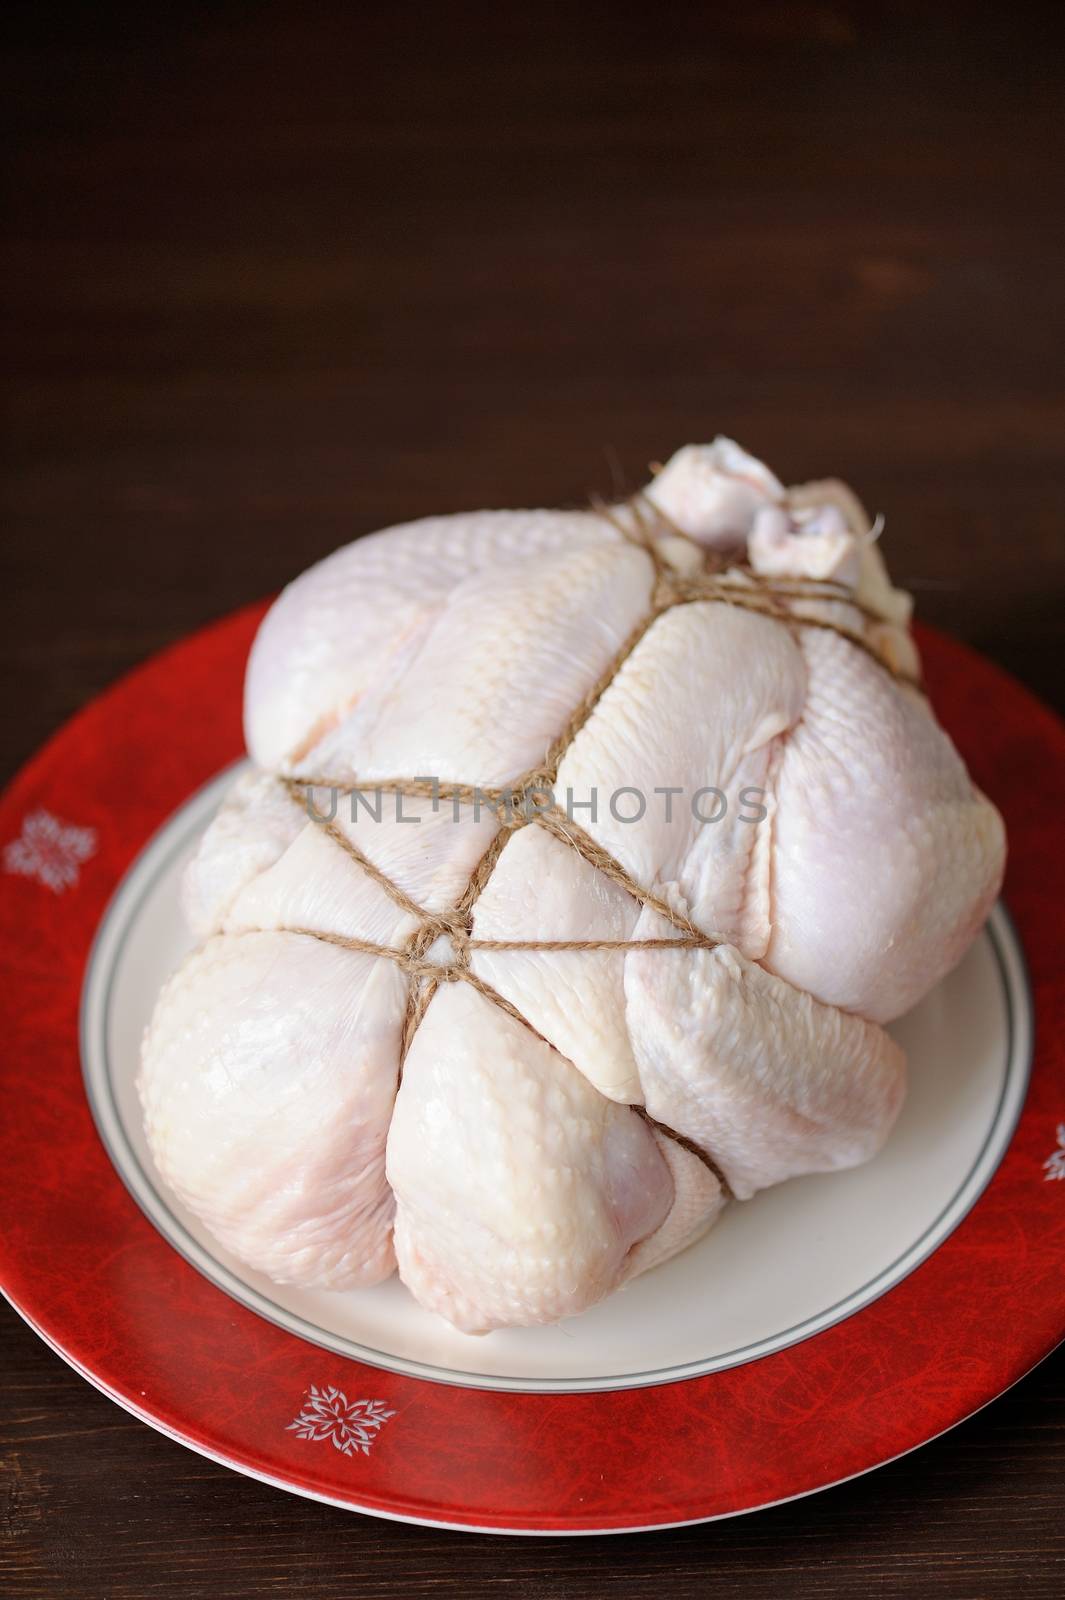 Bondage shibari raw chicken on red boarder plate on dark wood background vertical